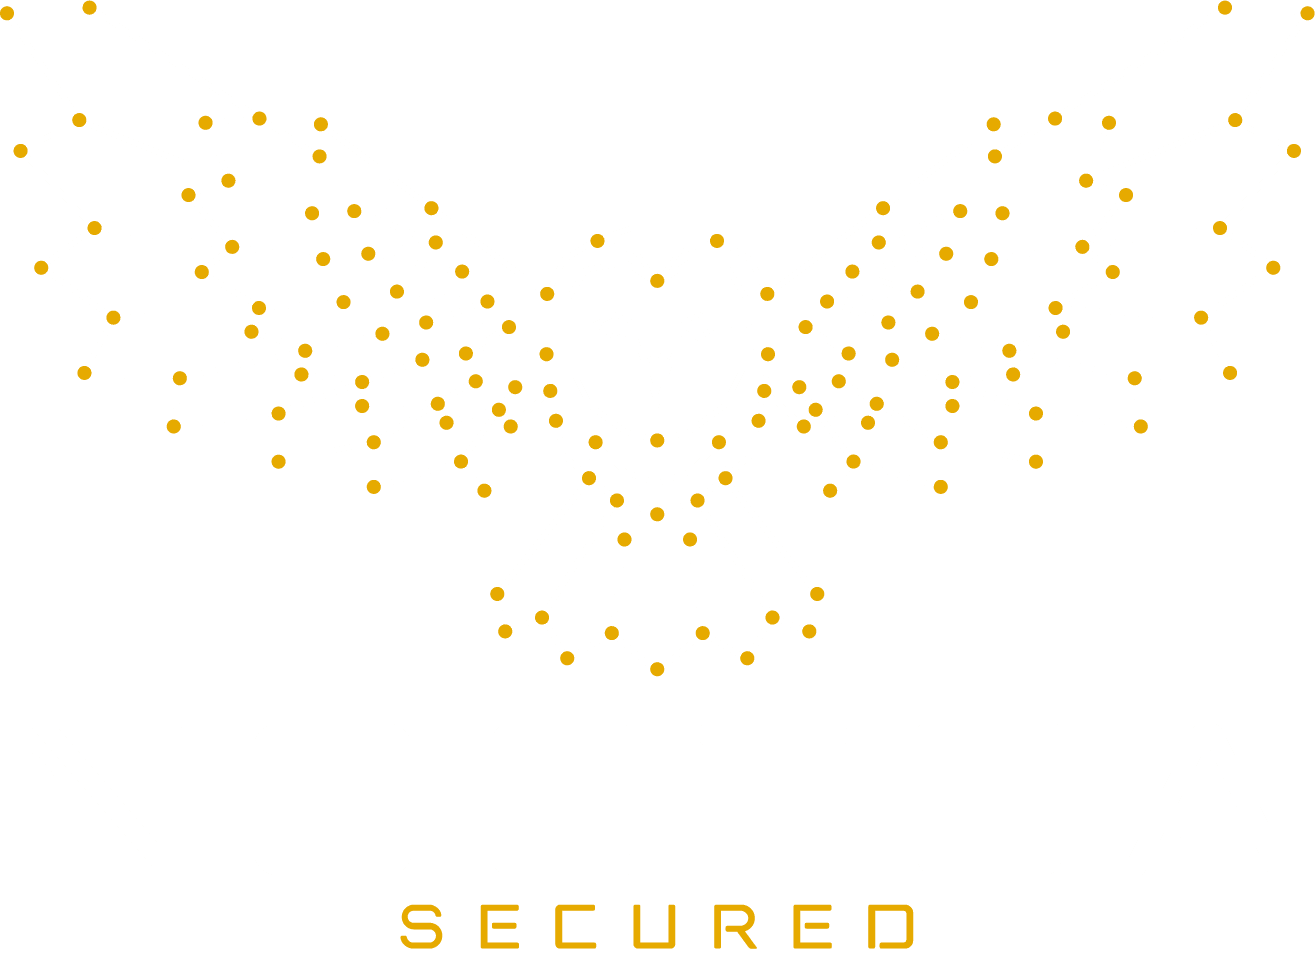 Noctua Secured